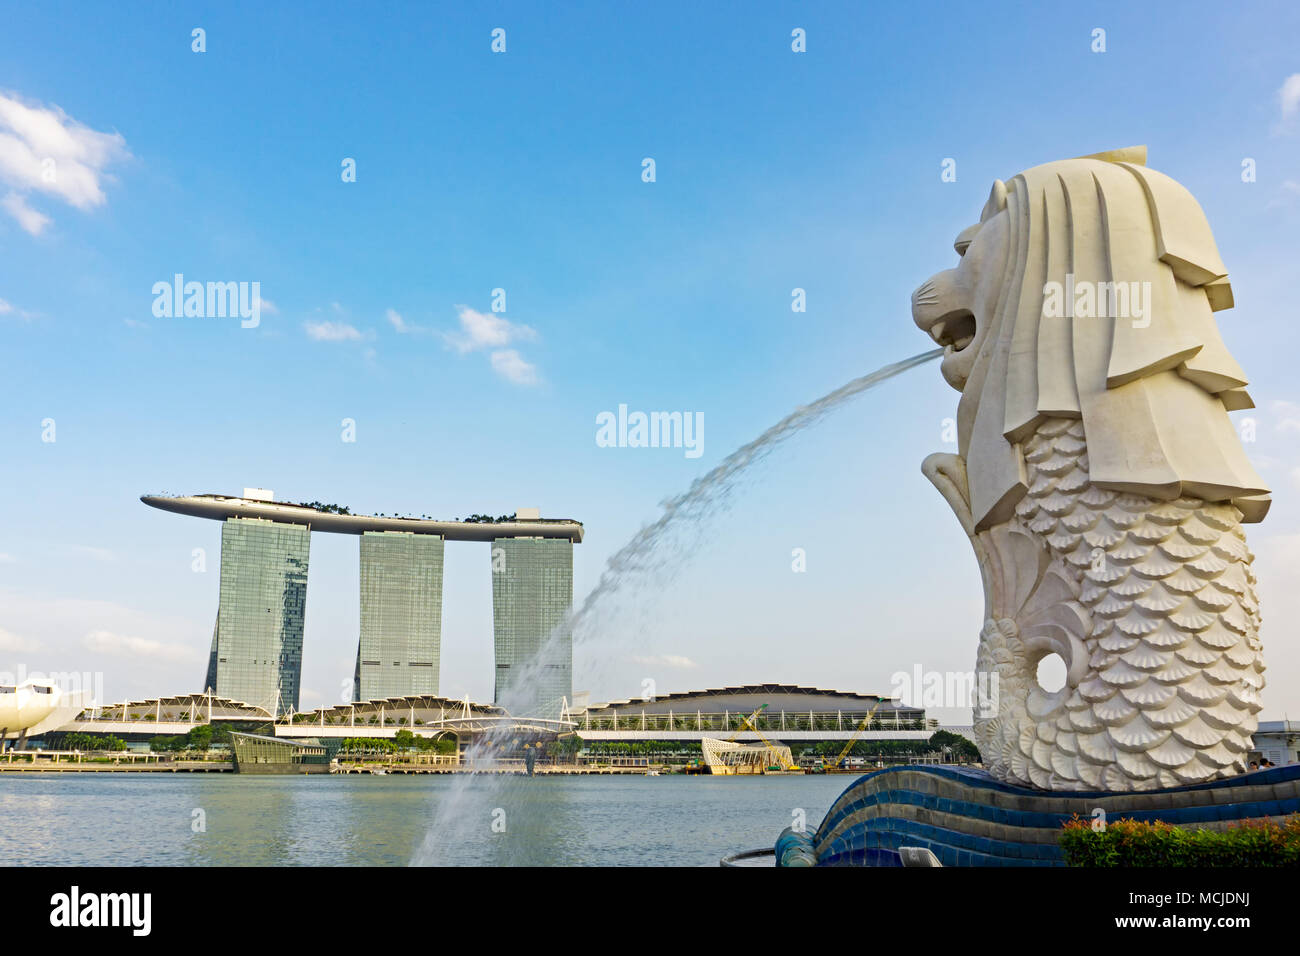 Singapore City, Singapore - February 10, 2018: View of Merlion Statue, famous landmark in Singapore. Stock Photo